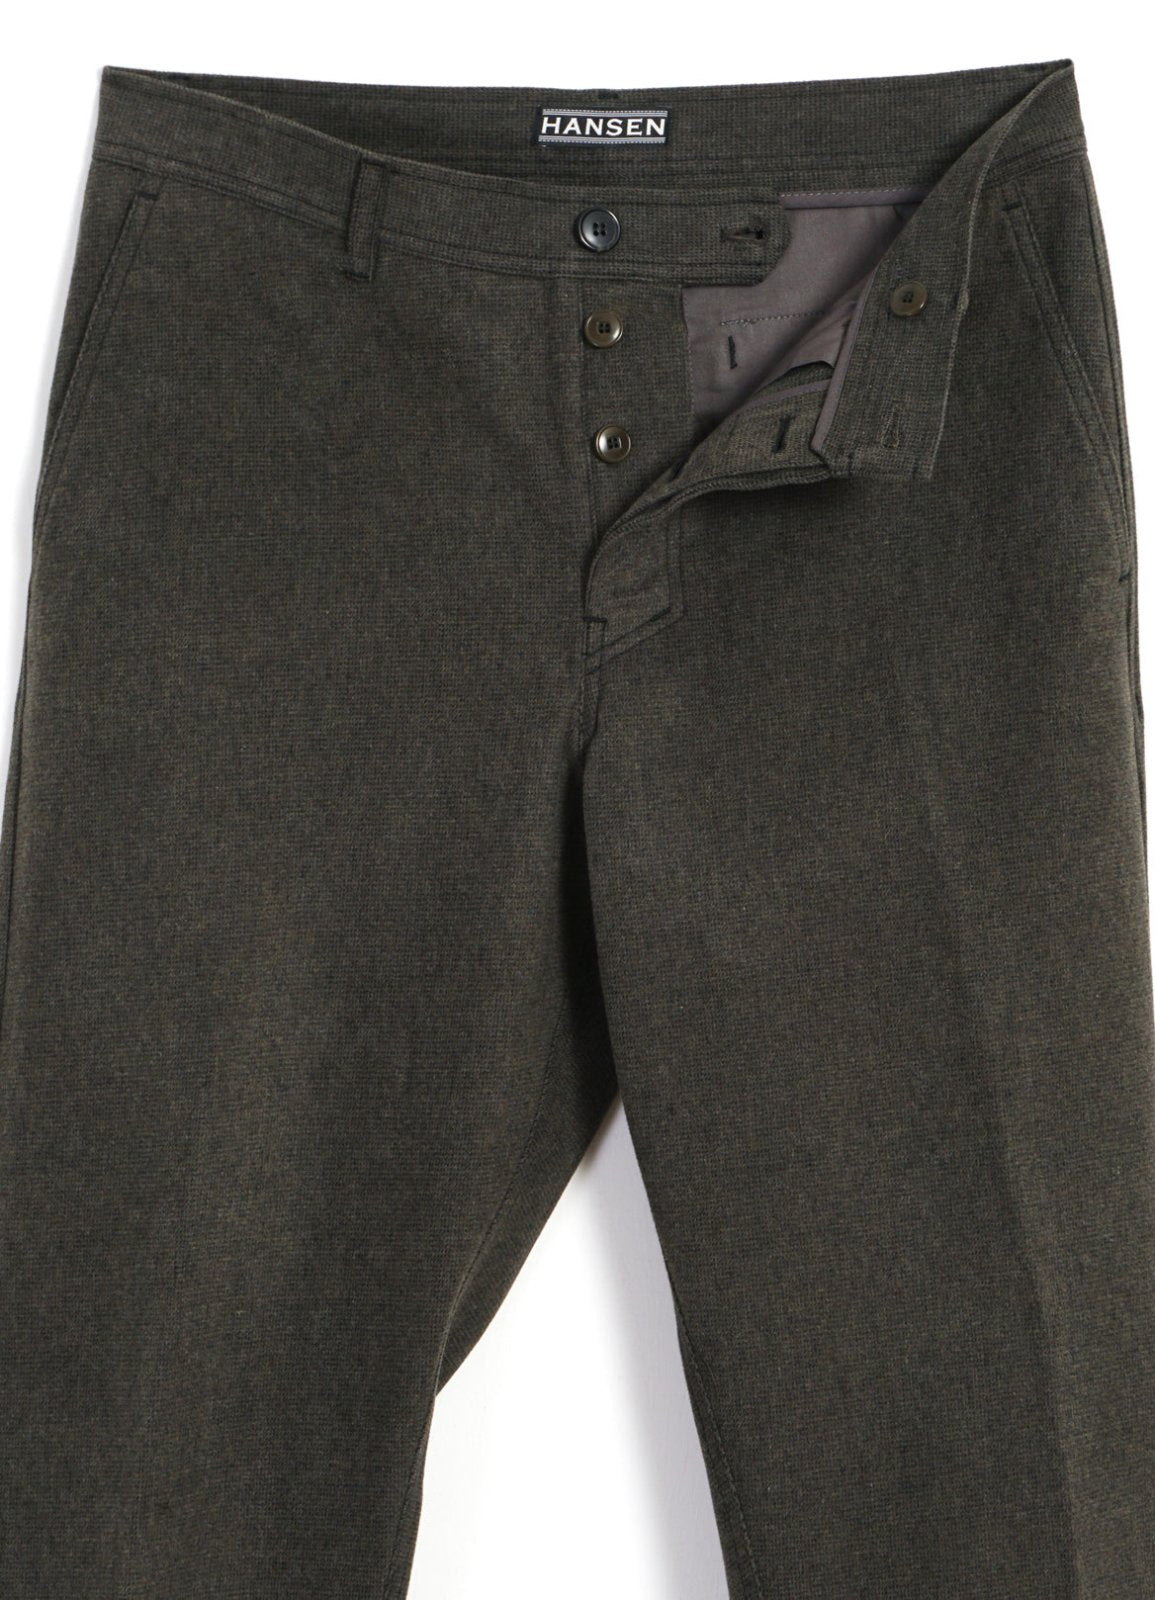 HANSEN GARMENTS - KEN | Wide Cut Trousers | Greenish - HANSEN Garments